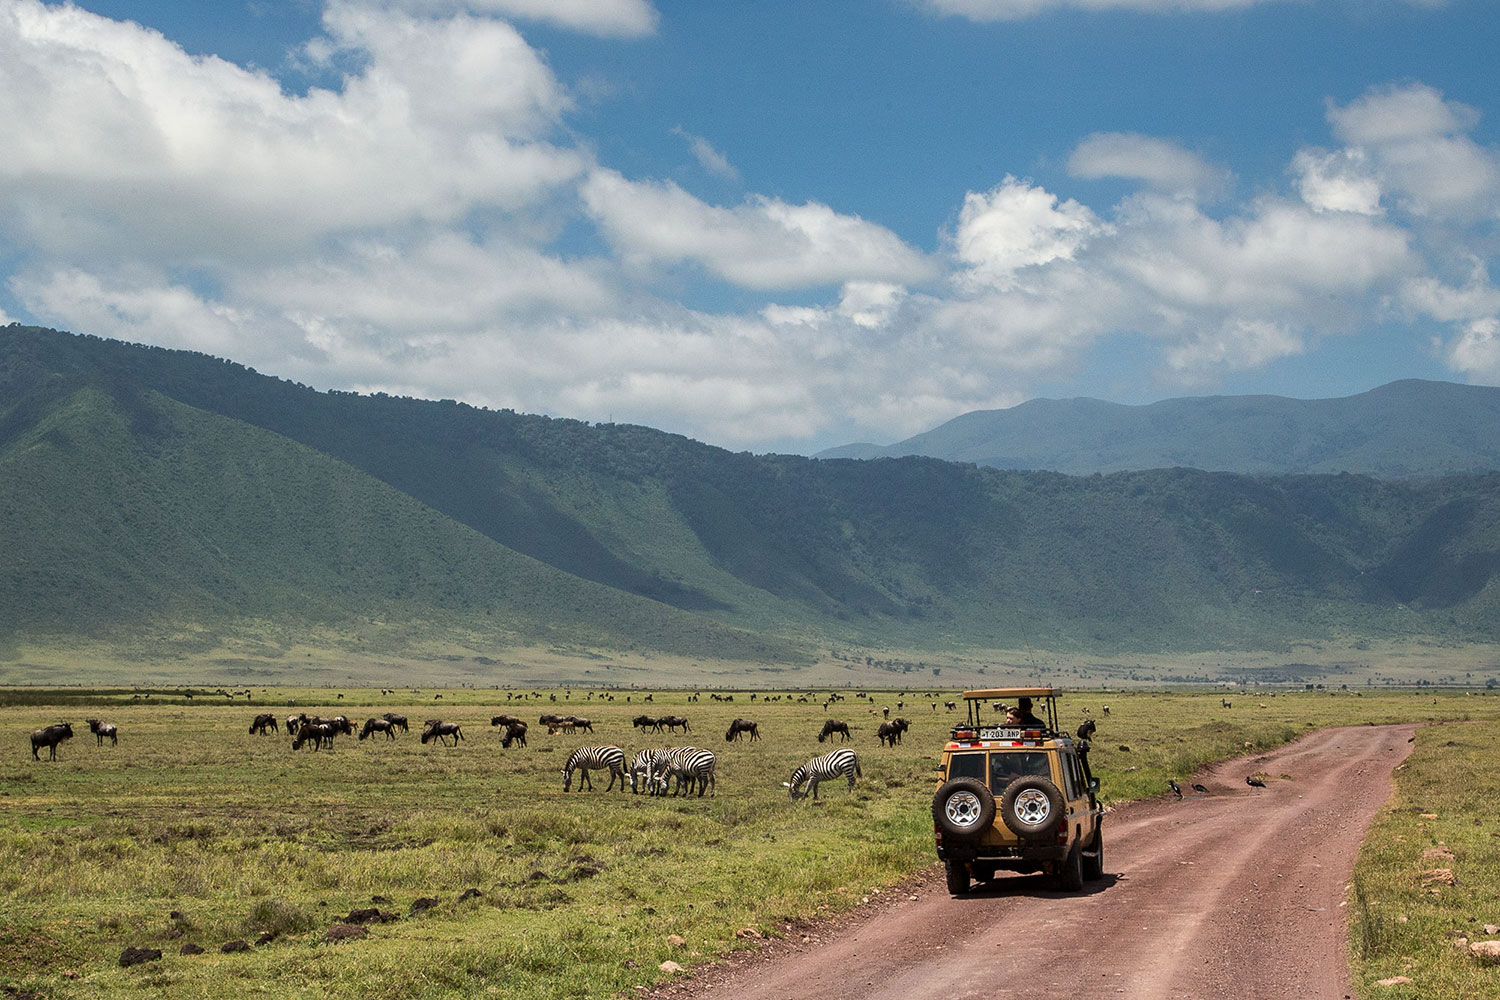 Day 4 Ngorongoro Crater